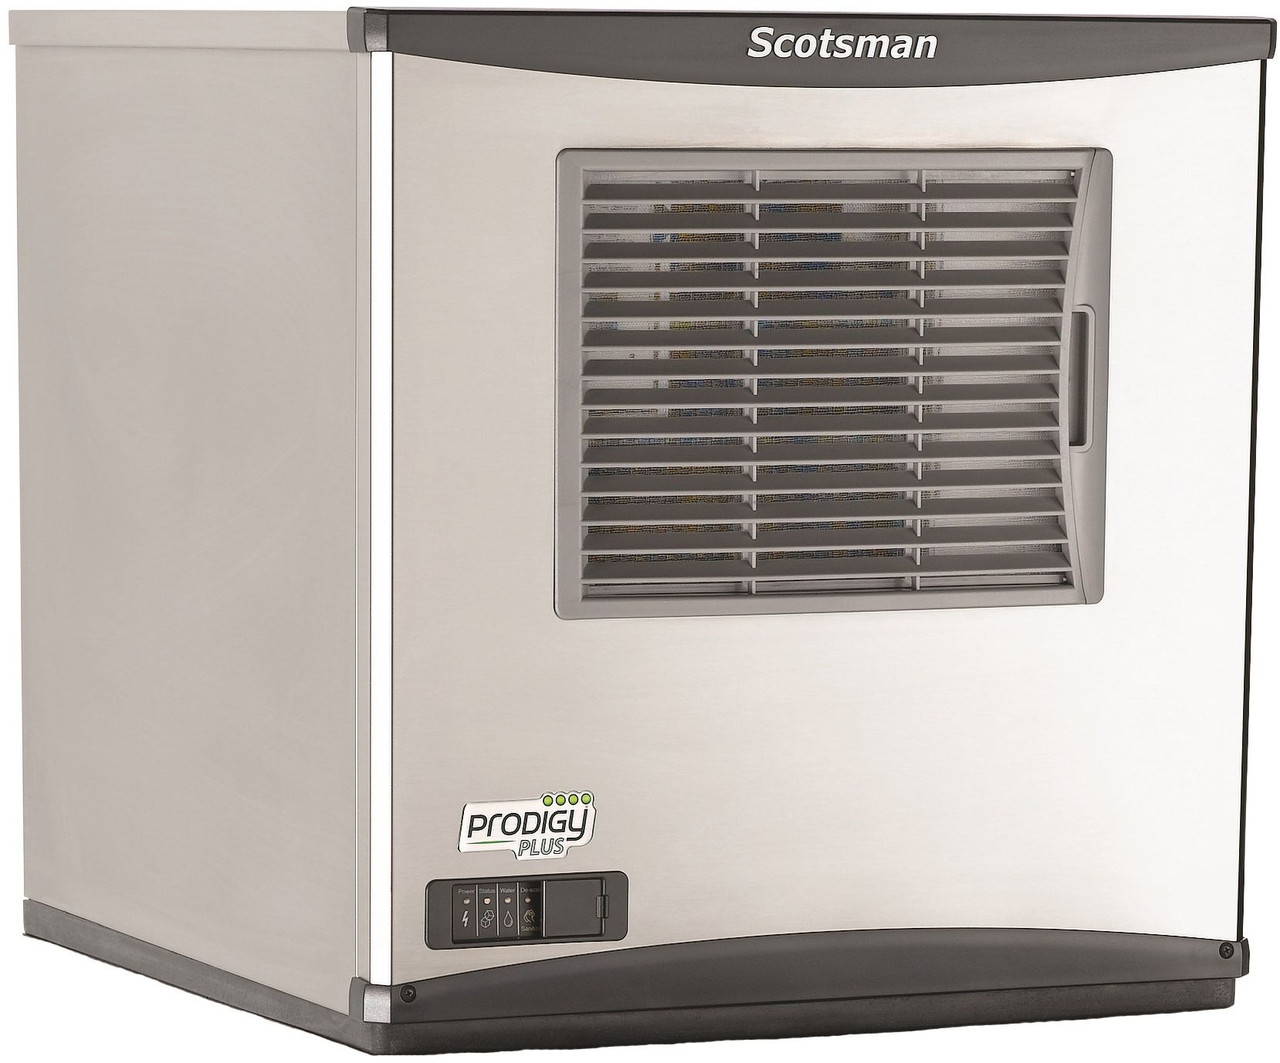 Scotsman FS0522A-1 450 lb Flake Ice Machine - Air Cooled